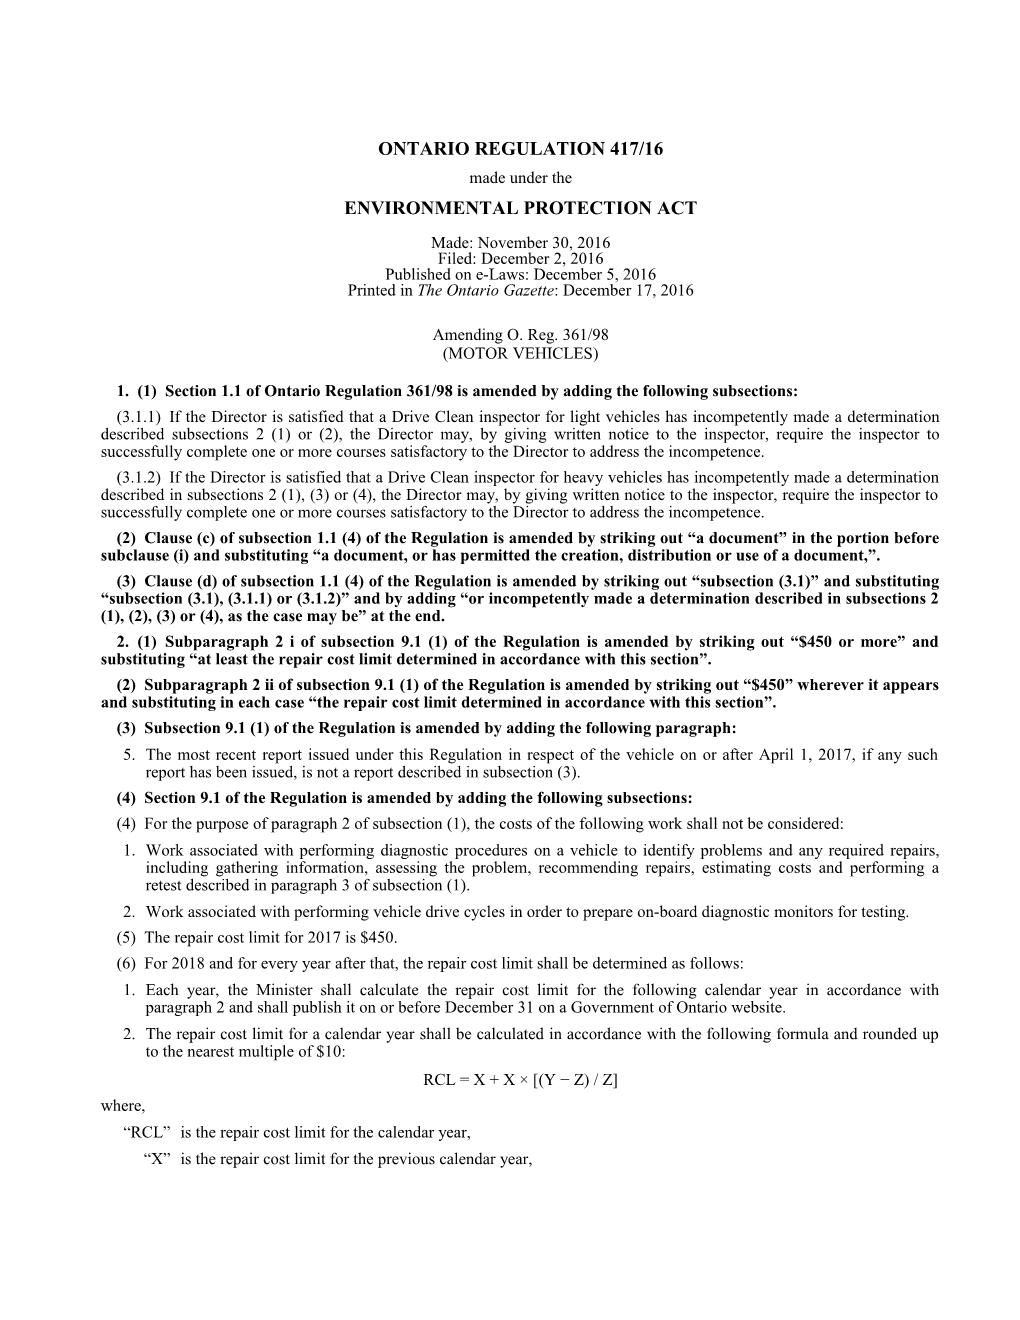 ENVIRONMENTAL PROTECTION ACT - O. Reg. 417/16